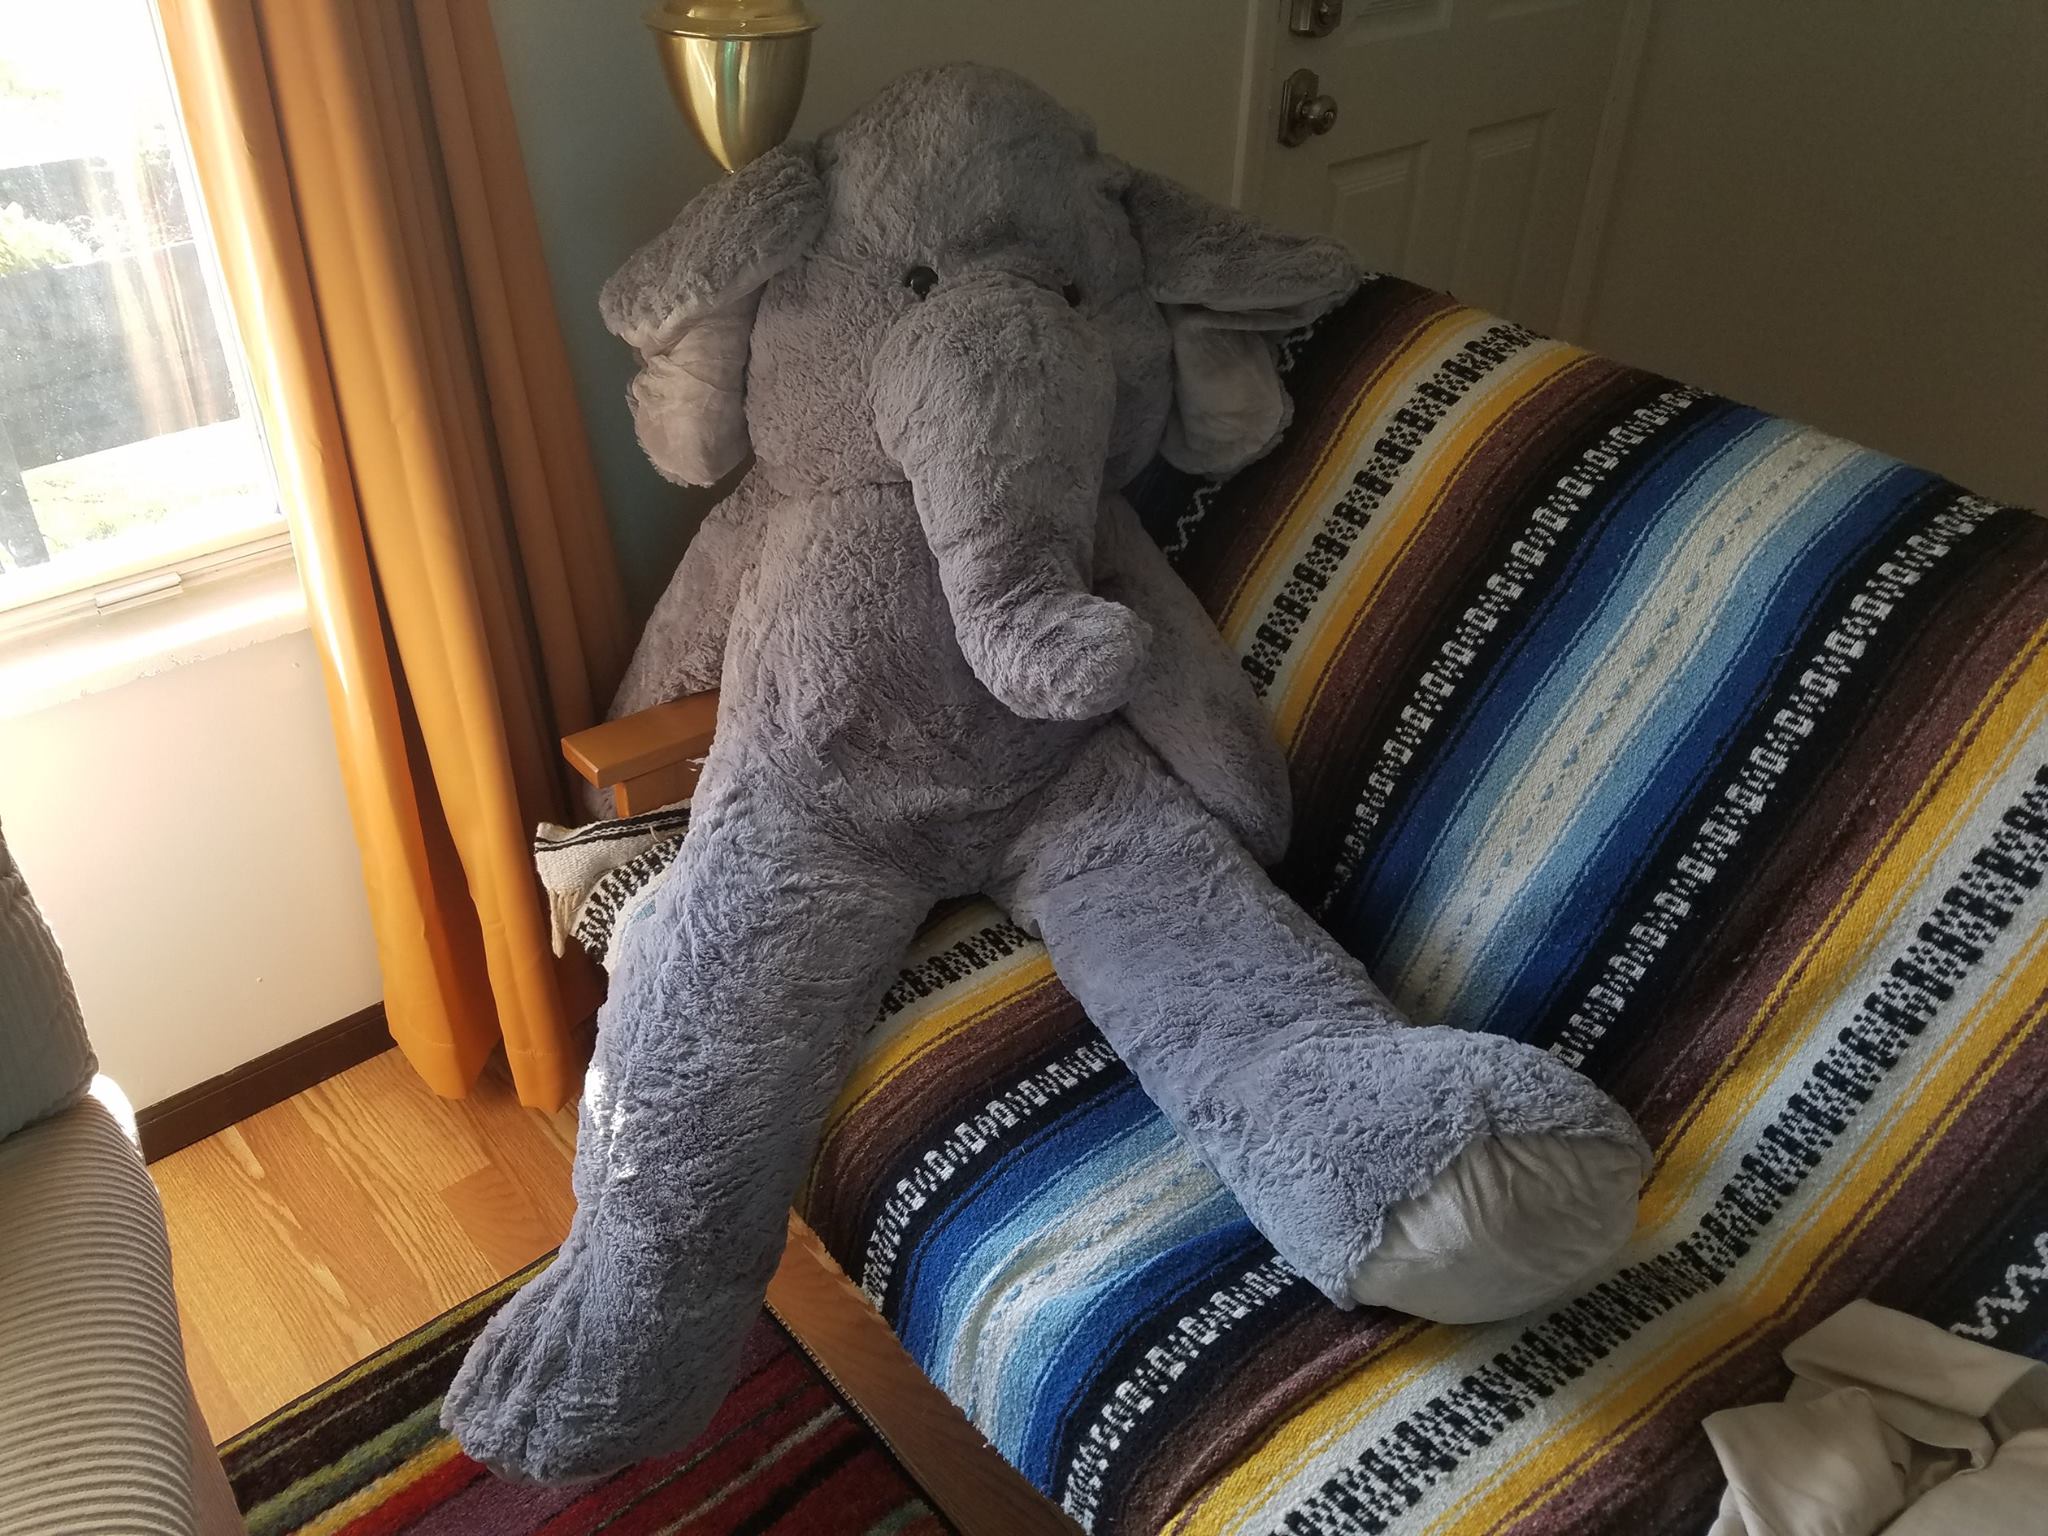 Giant stuffed elephant sprawled across a sofa